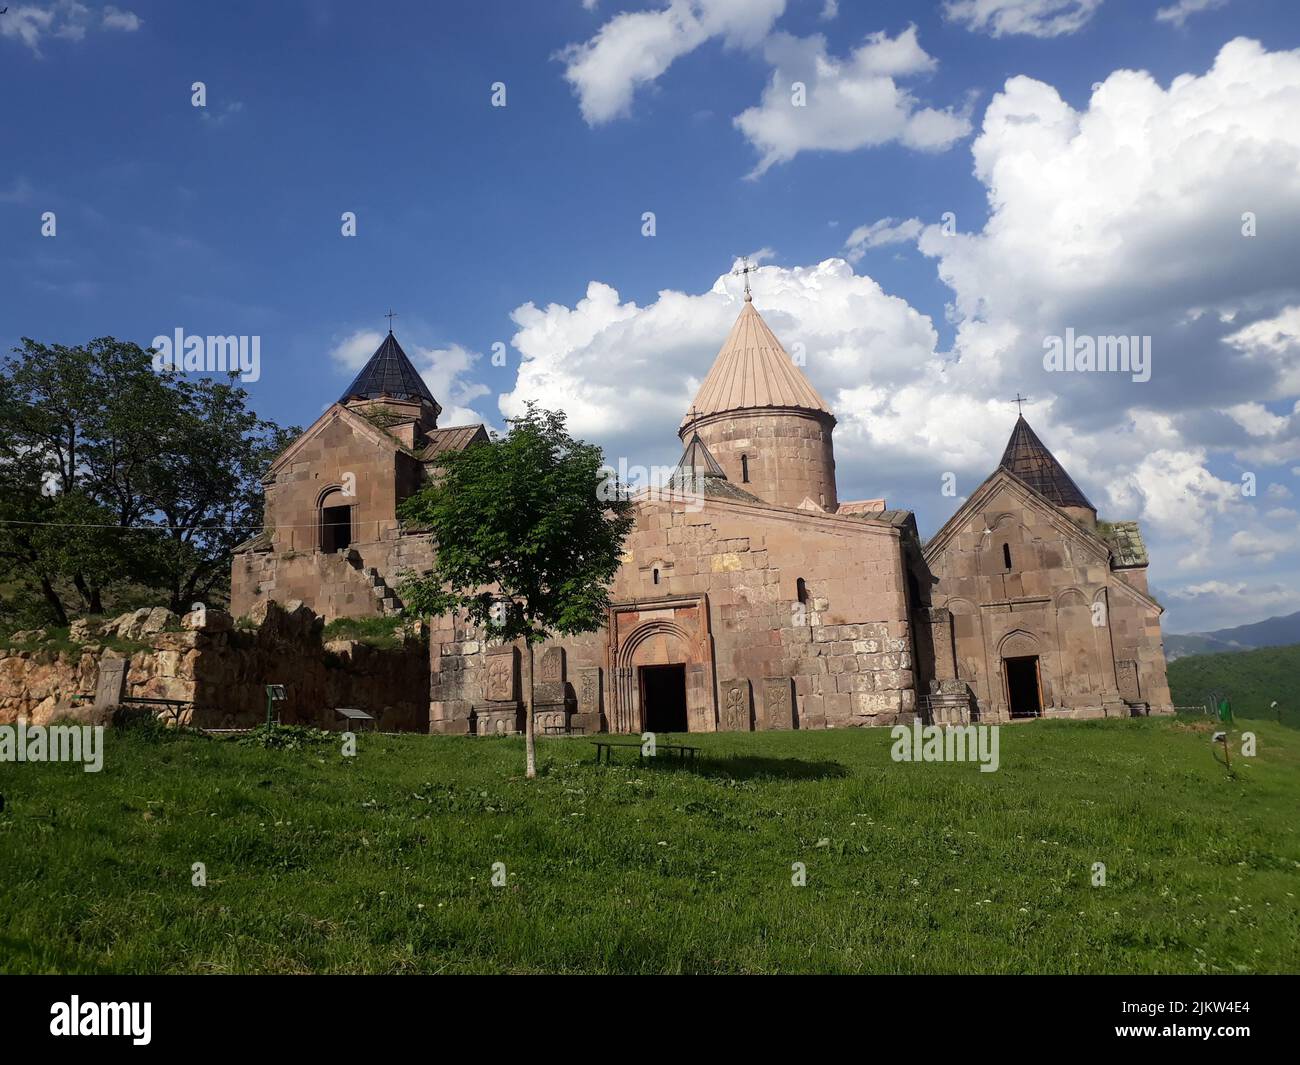 The historic beautiful Goshavank Monastery Complex in Tavush, Armenia Stock Photo